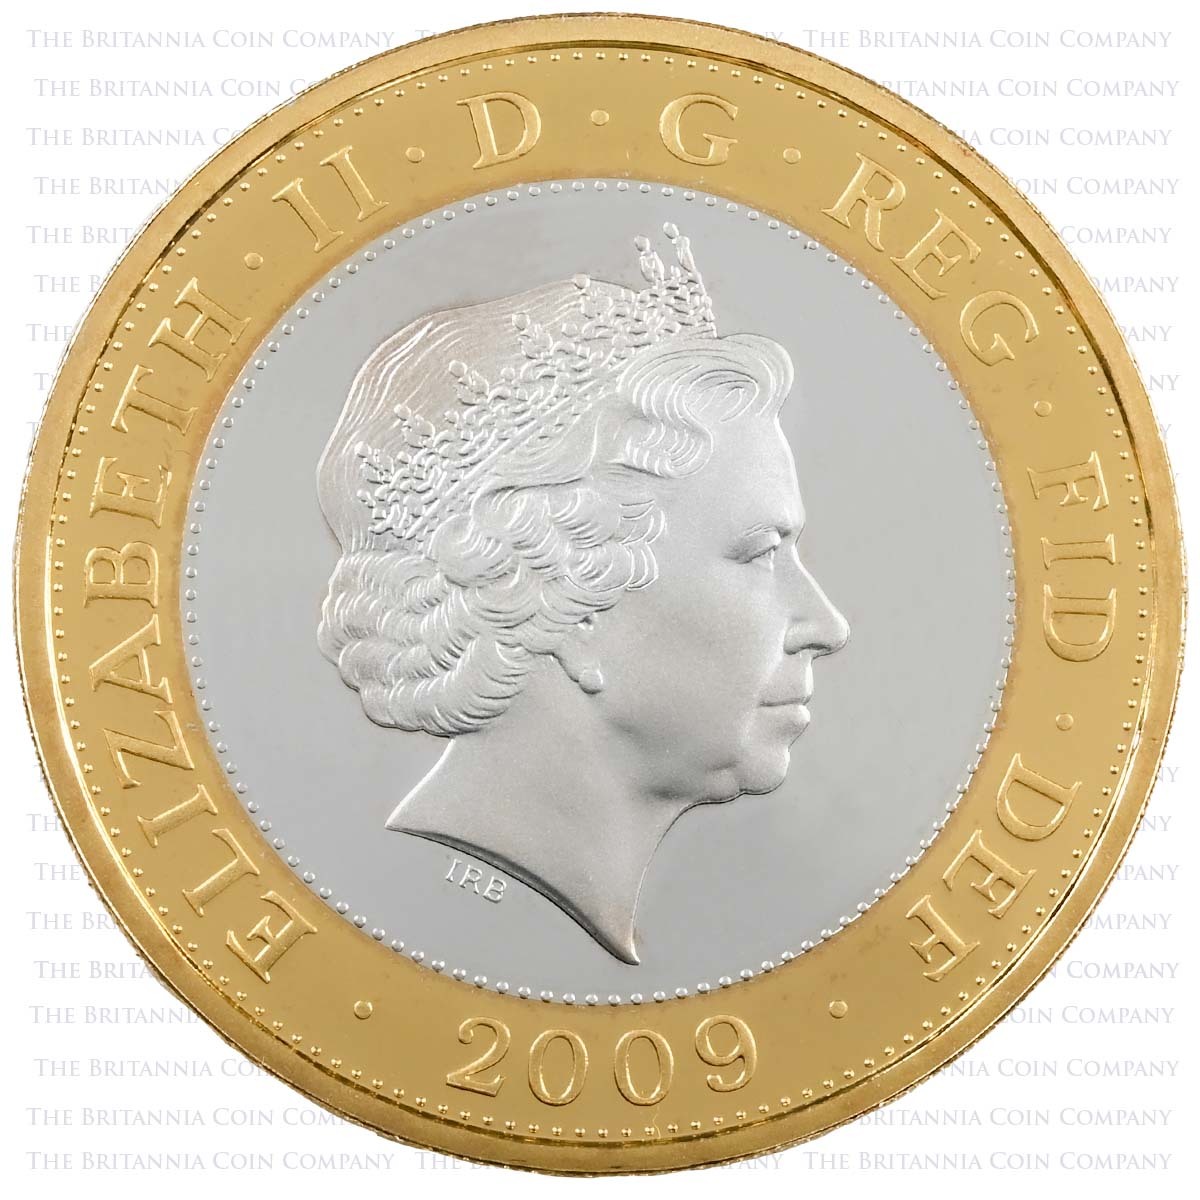 UKREBSP 2009 Robert Burns Two Pound Silver Proof Coin Obverse